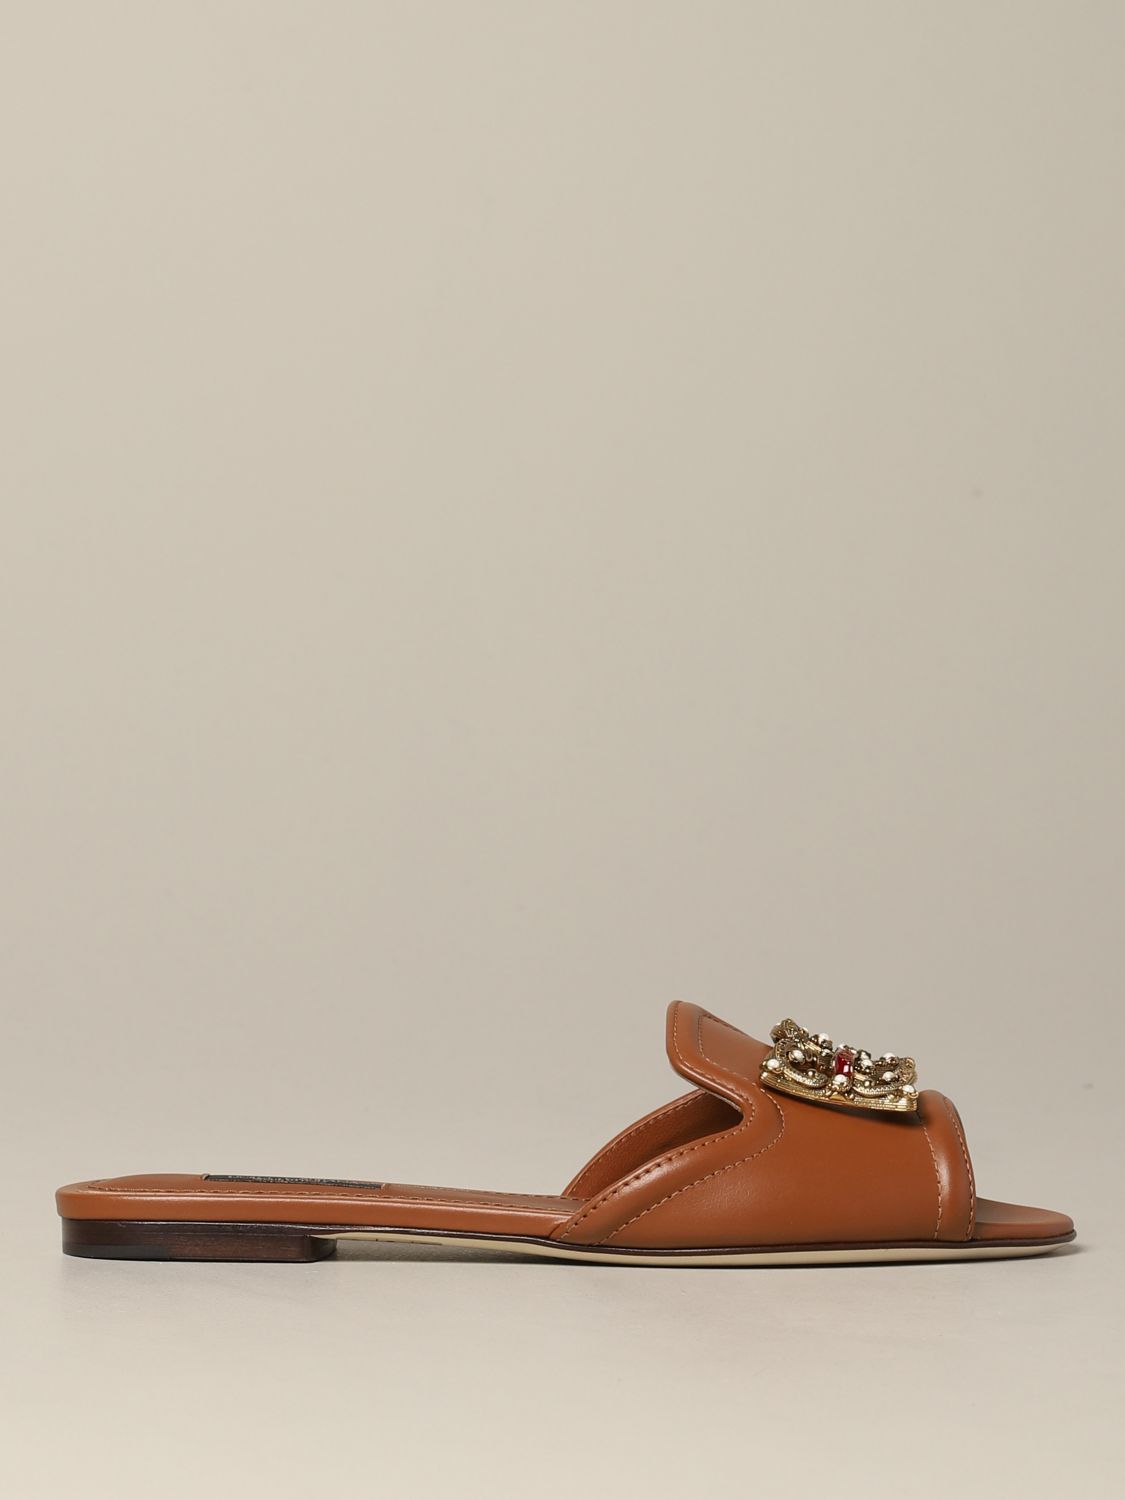 dolce & gabbana women's sandals